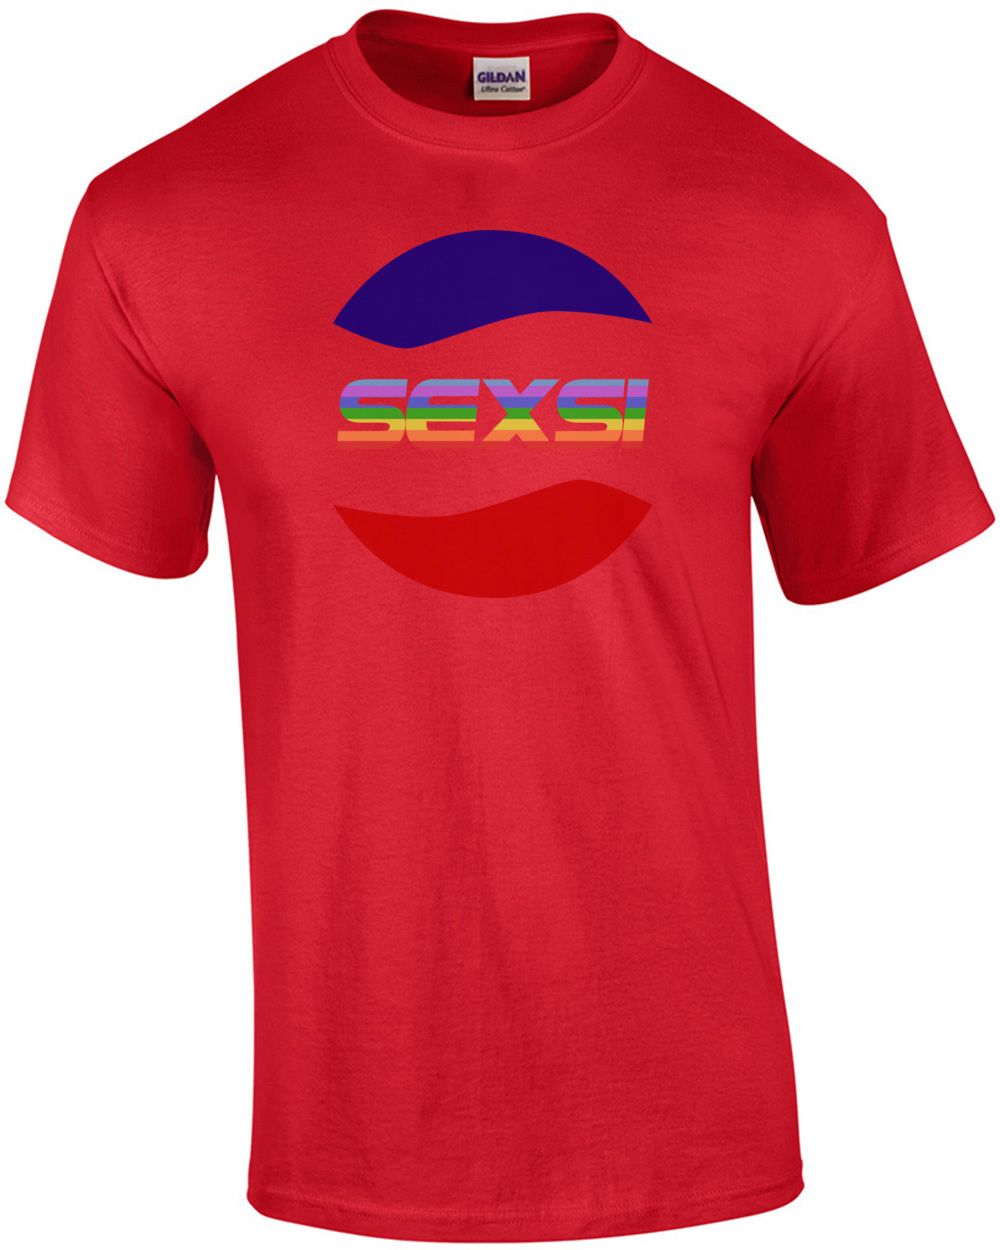 Sexsi Rainbow Pepsi Parody Gay Pride Lesbian T Shirt Ebay 2696